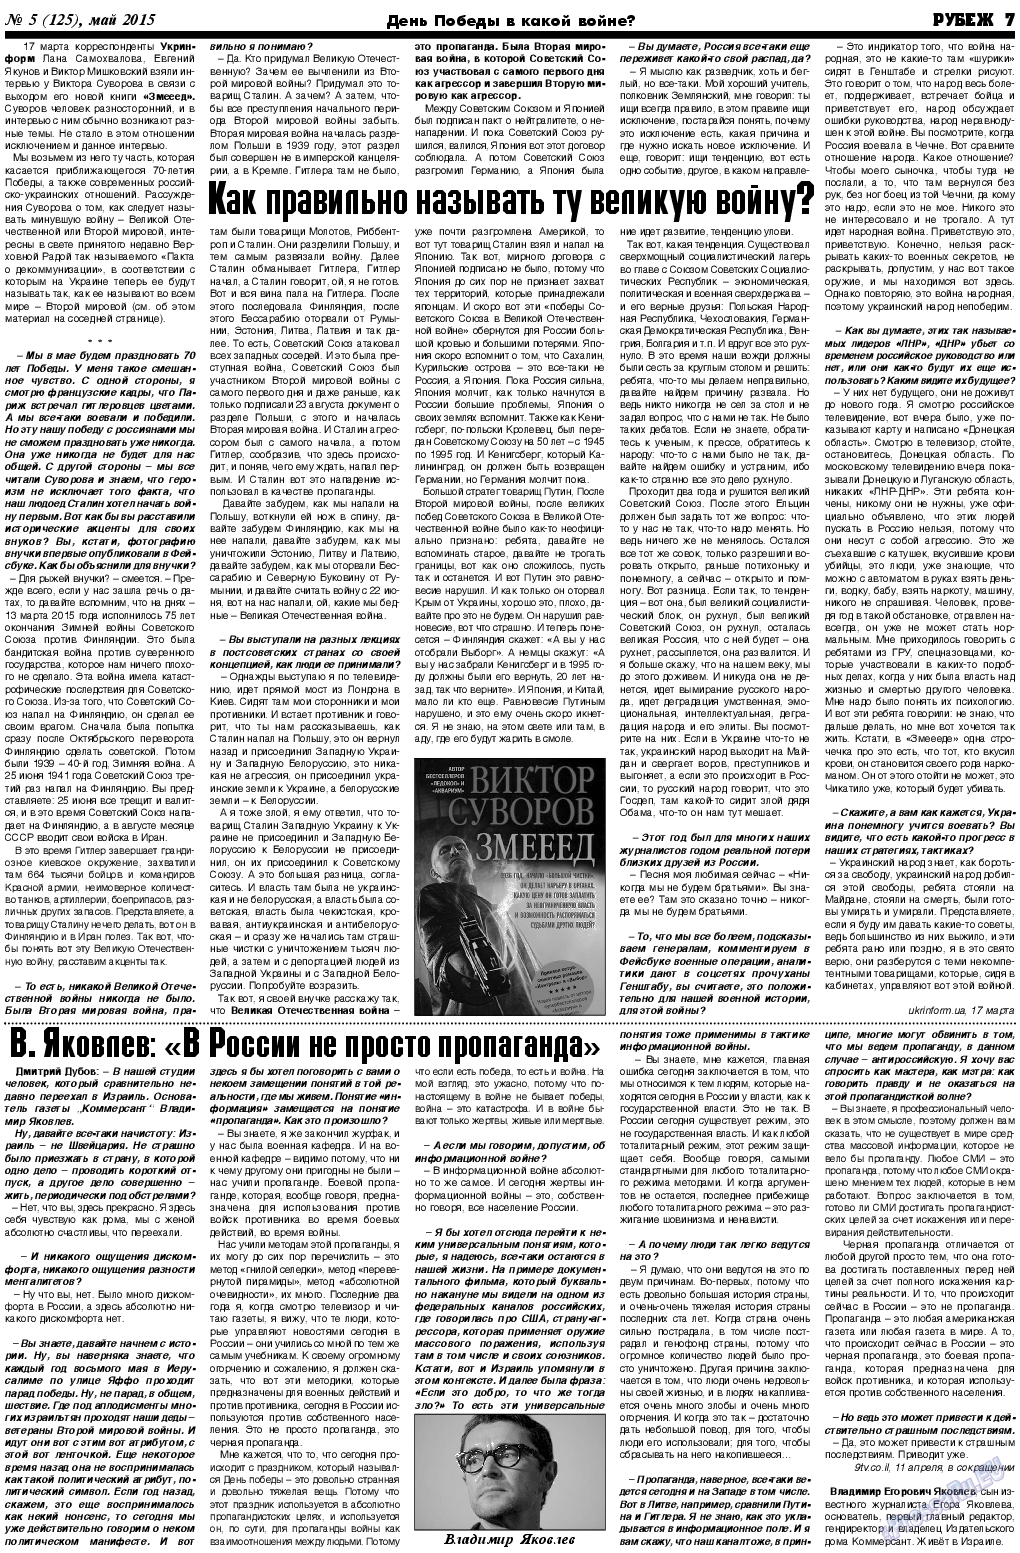 Рубеж, газета. 2015 №5 стр.7